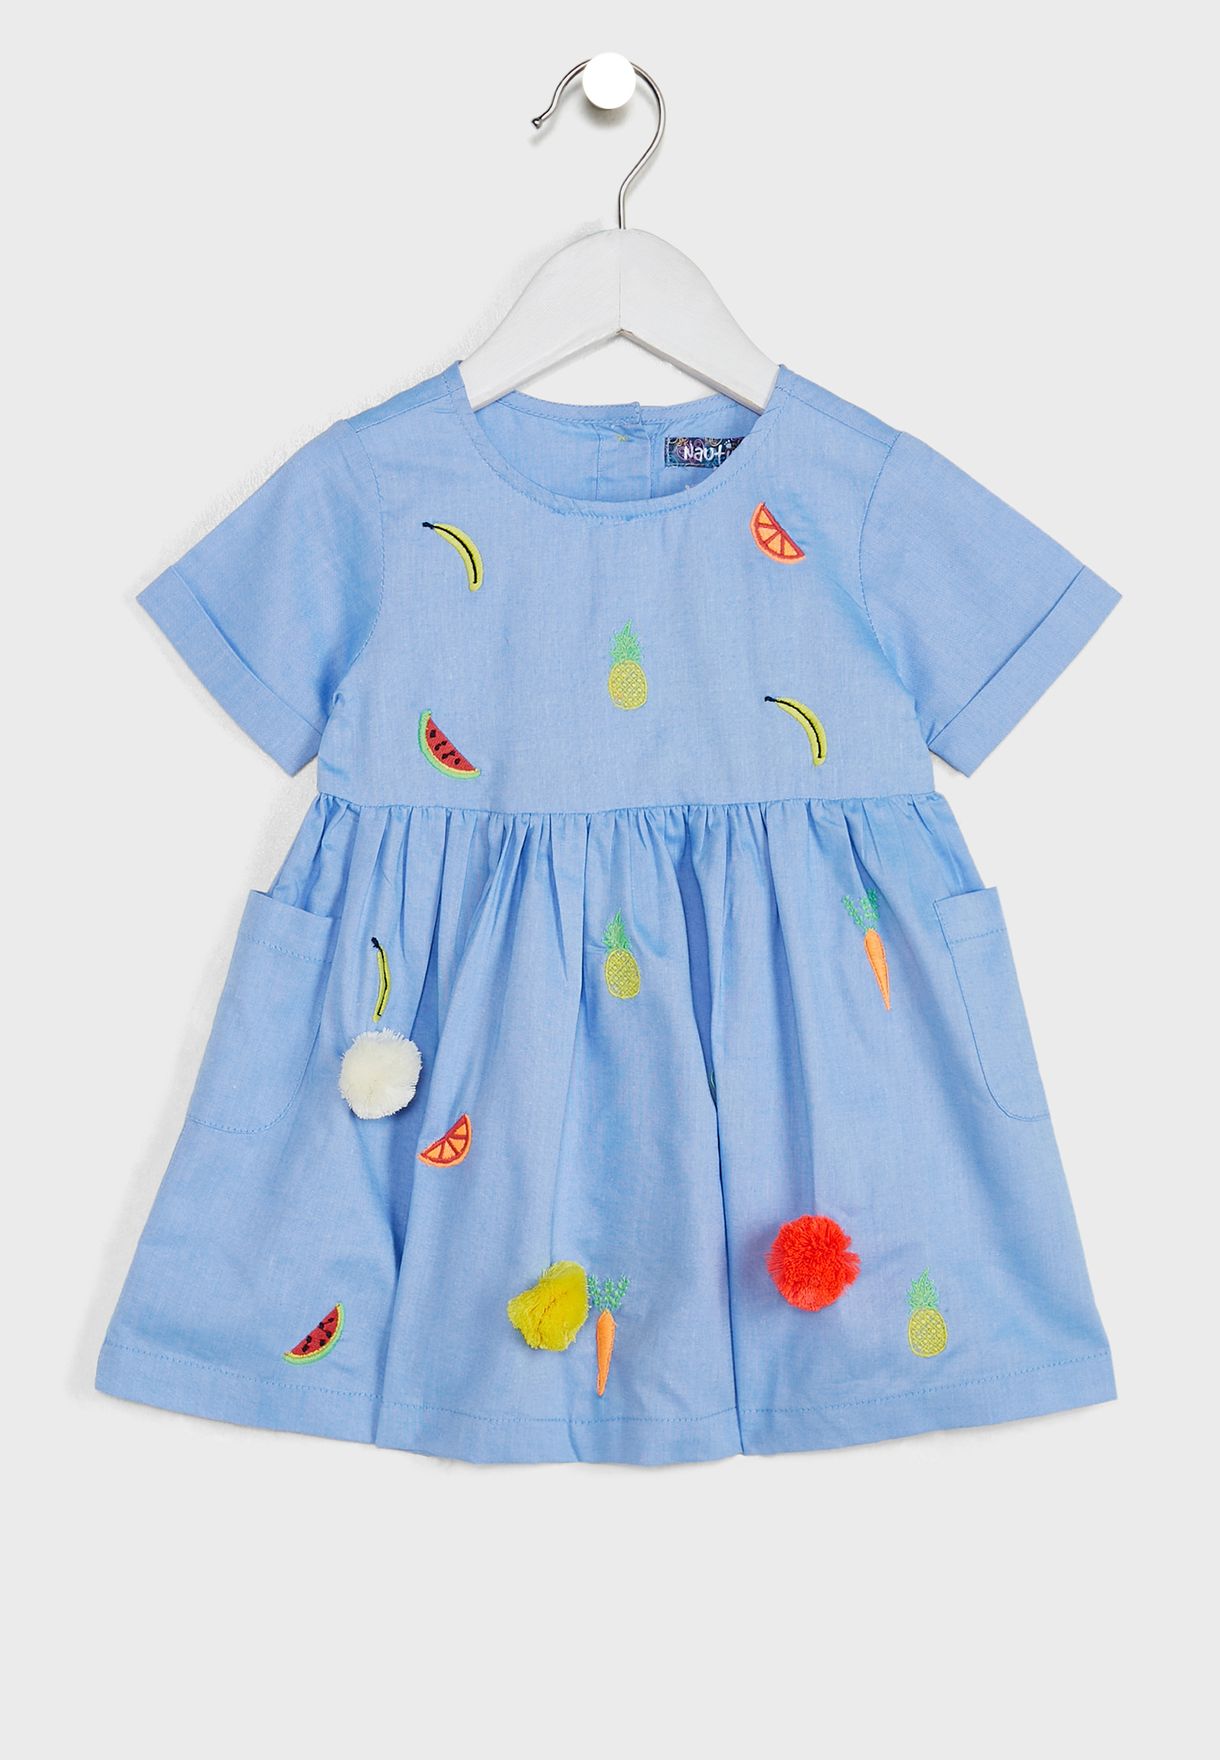  Embroidered A-Line Dress With Pom Pom Detailing